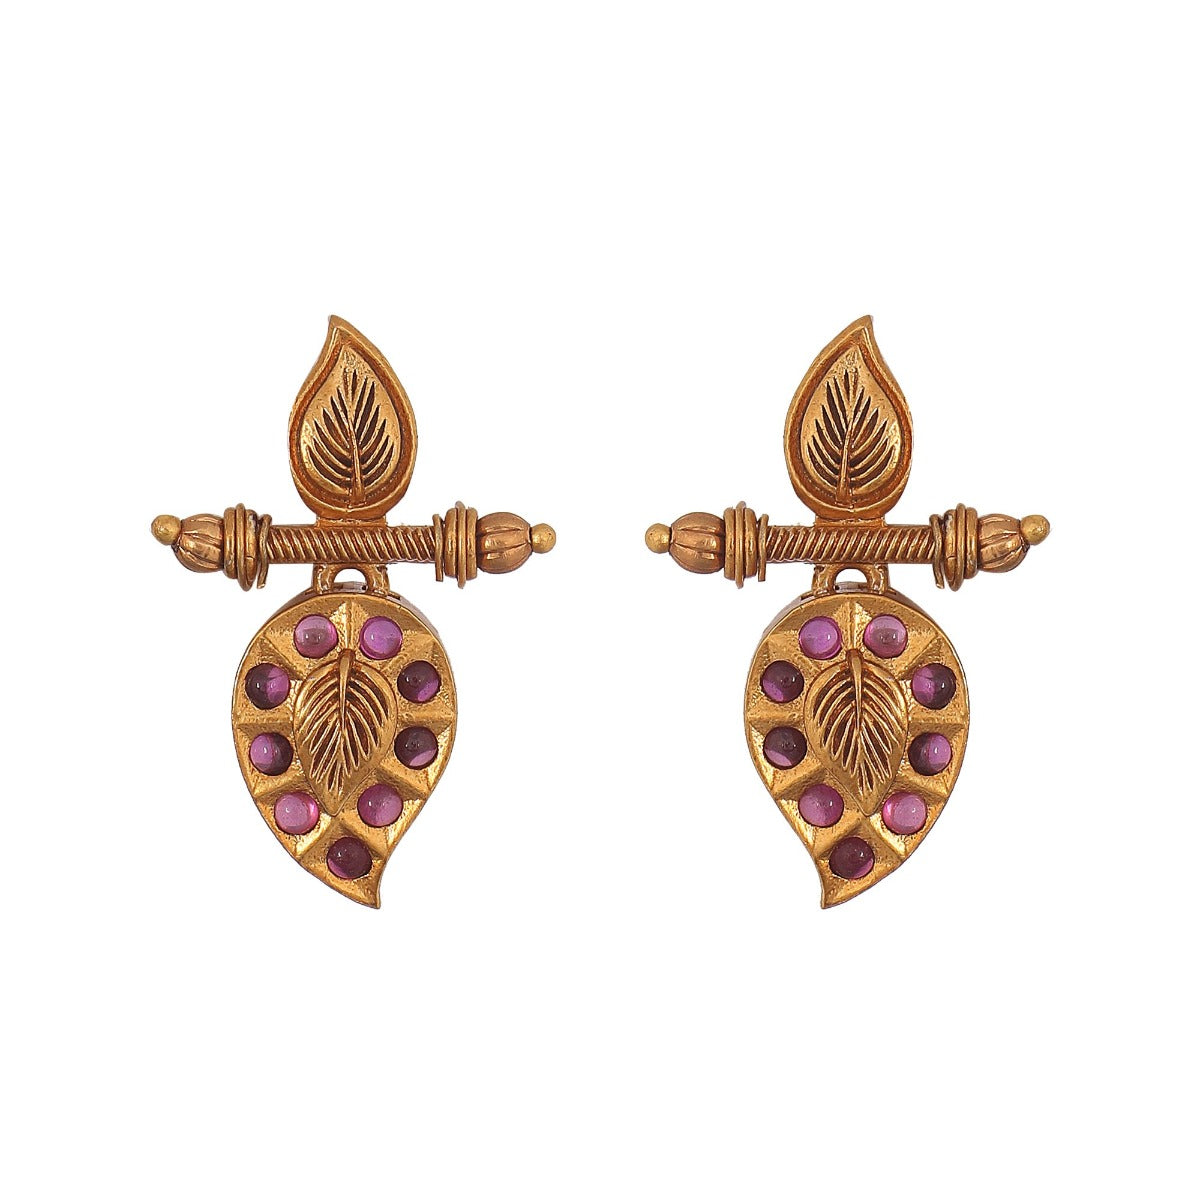 Antique Gold Plated Mango Motif Long Necklace Earrings Set